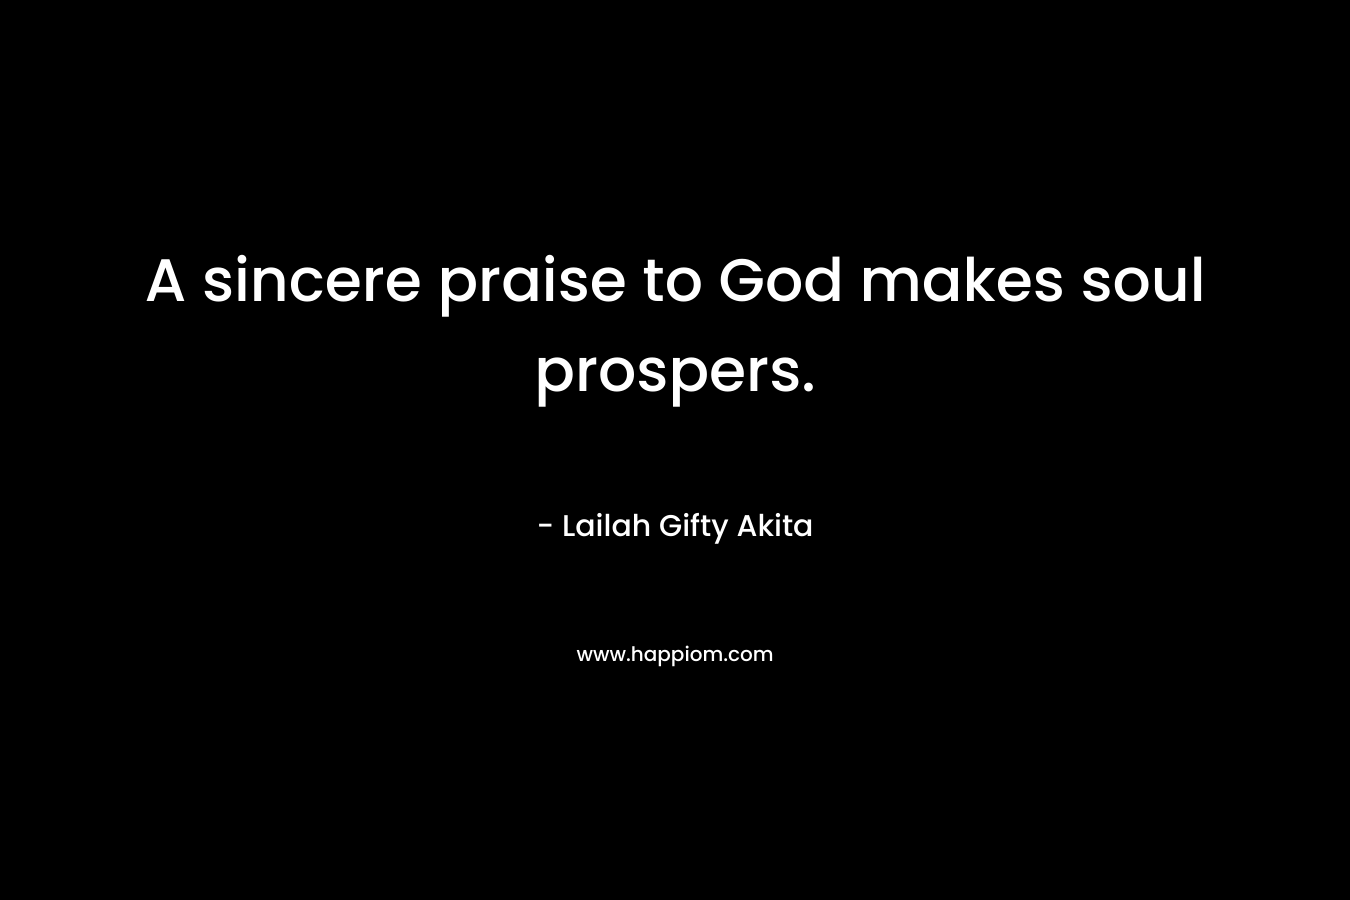 A sincere praise to God makes soul prospers.